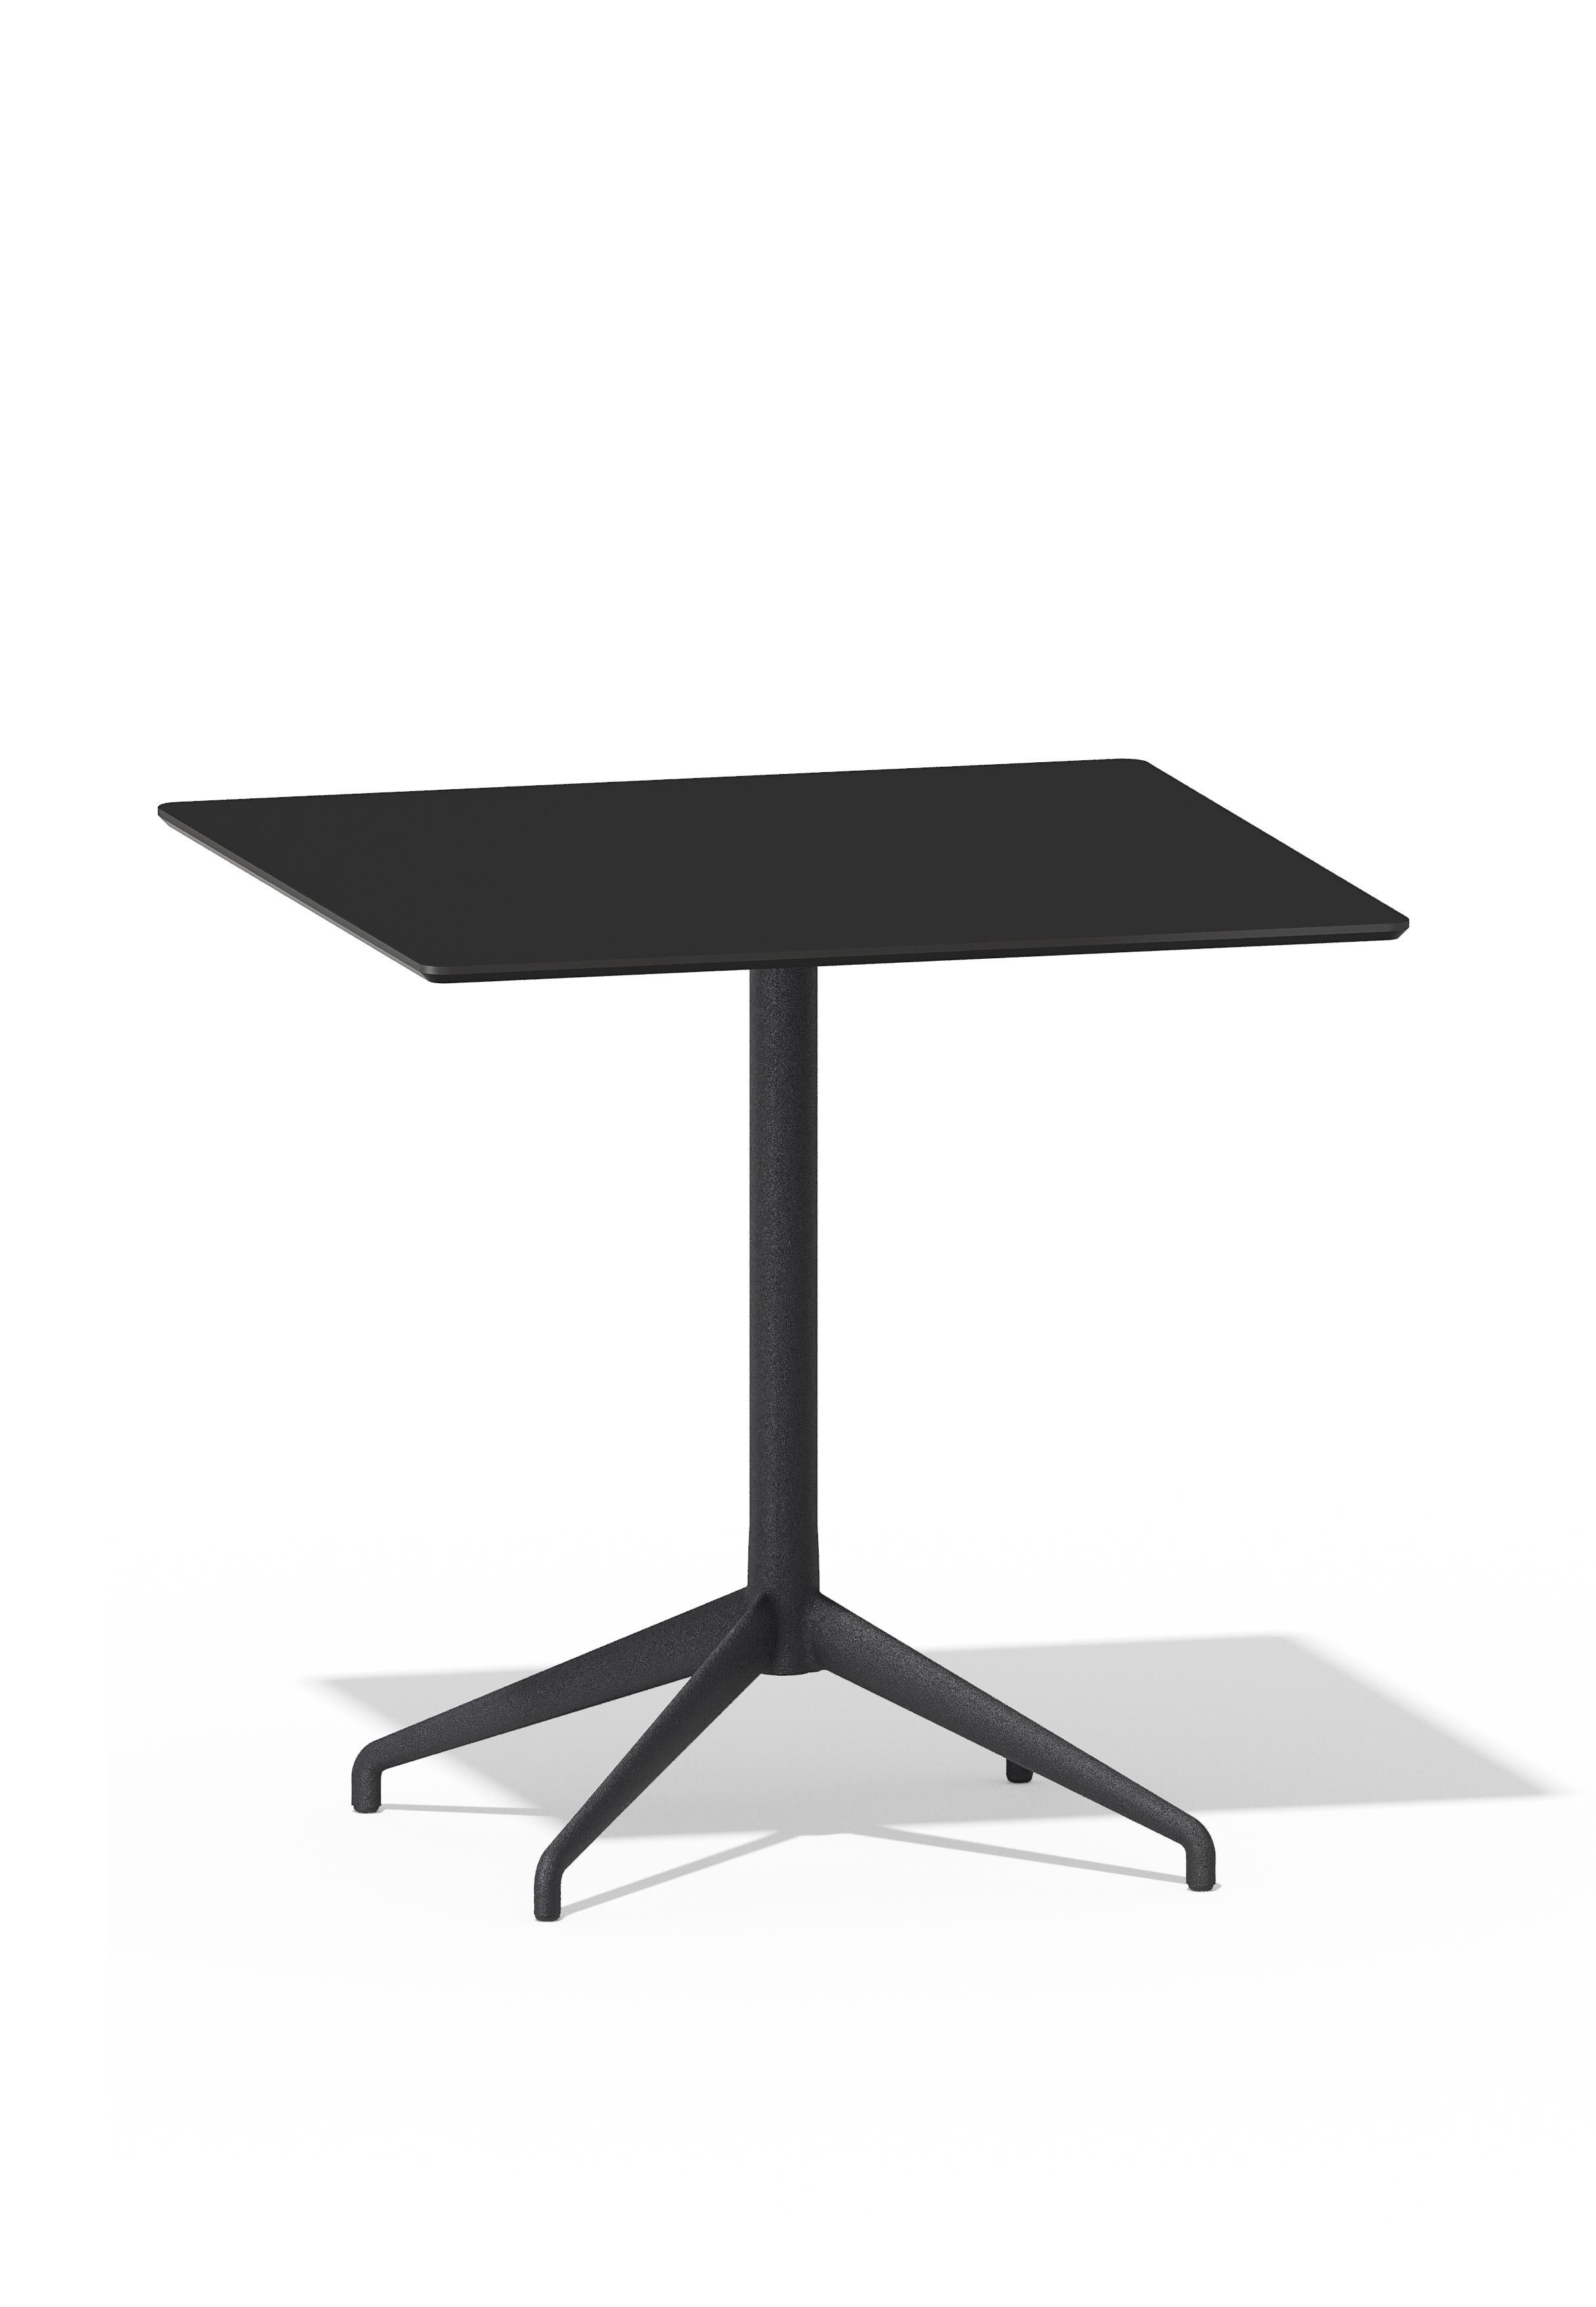 Italian Alis Square Table, Aluminium Base and Ceramic Top, by Discipline Lab For Sale